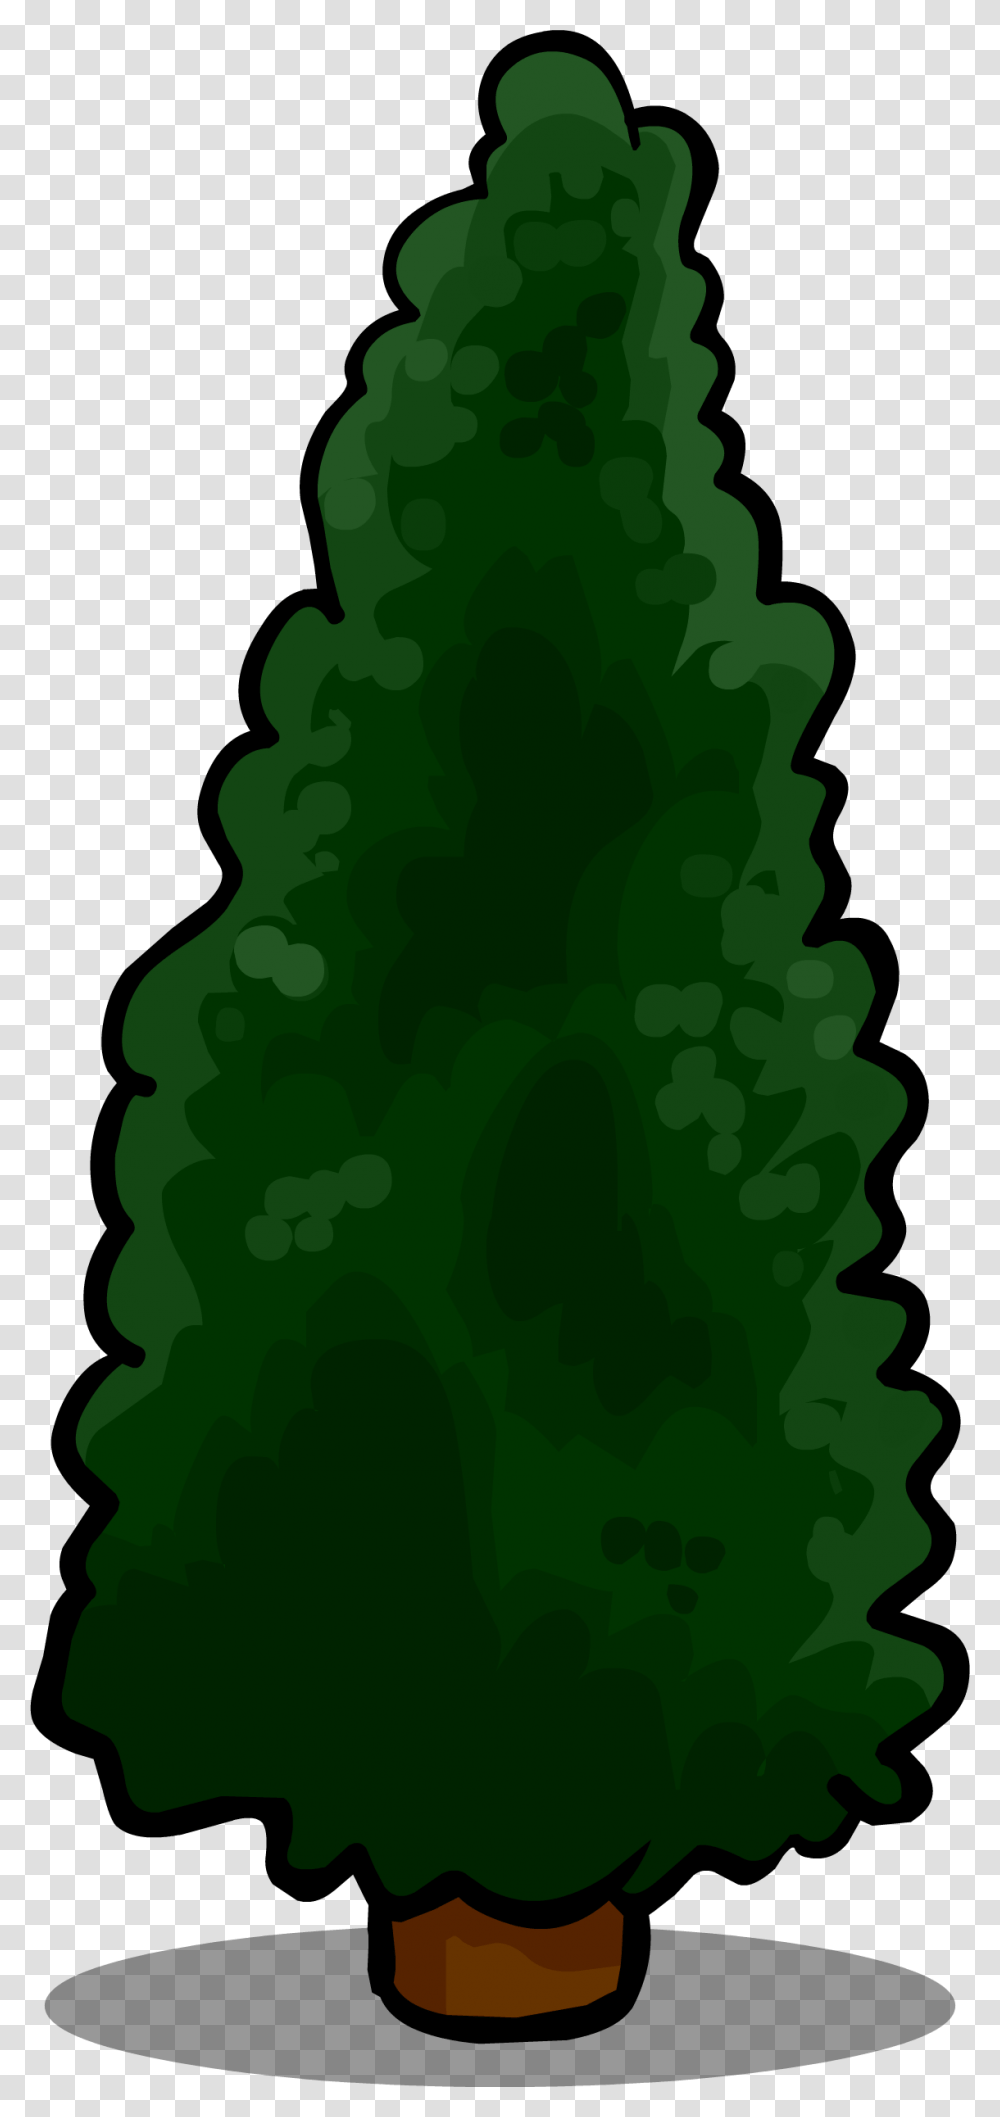 Hedge Clipart Club Penguin Tree Furniture, Green, Plant, Military Uniform Transparent Png